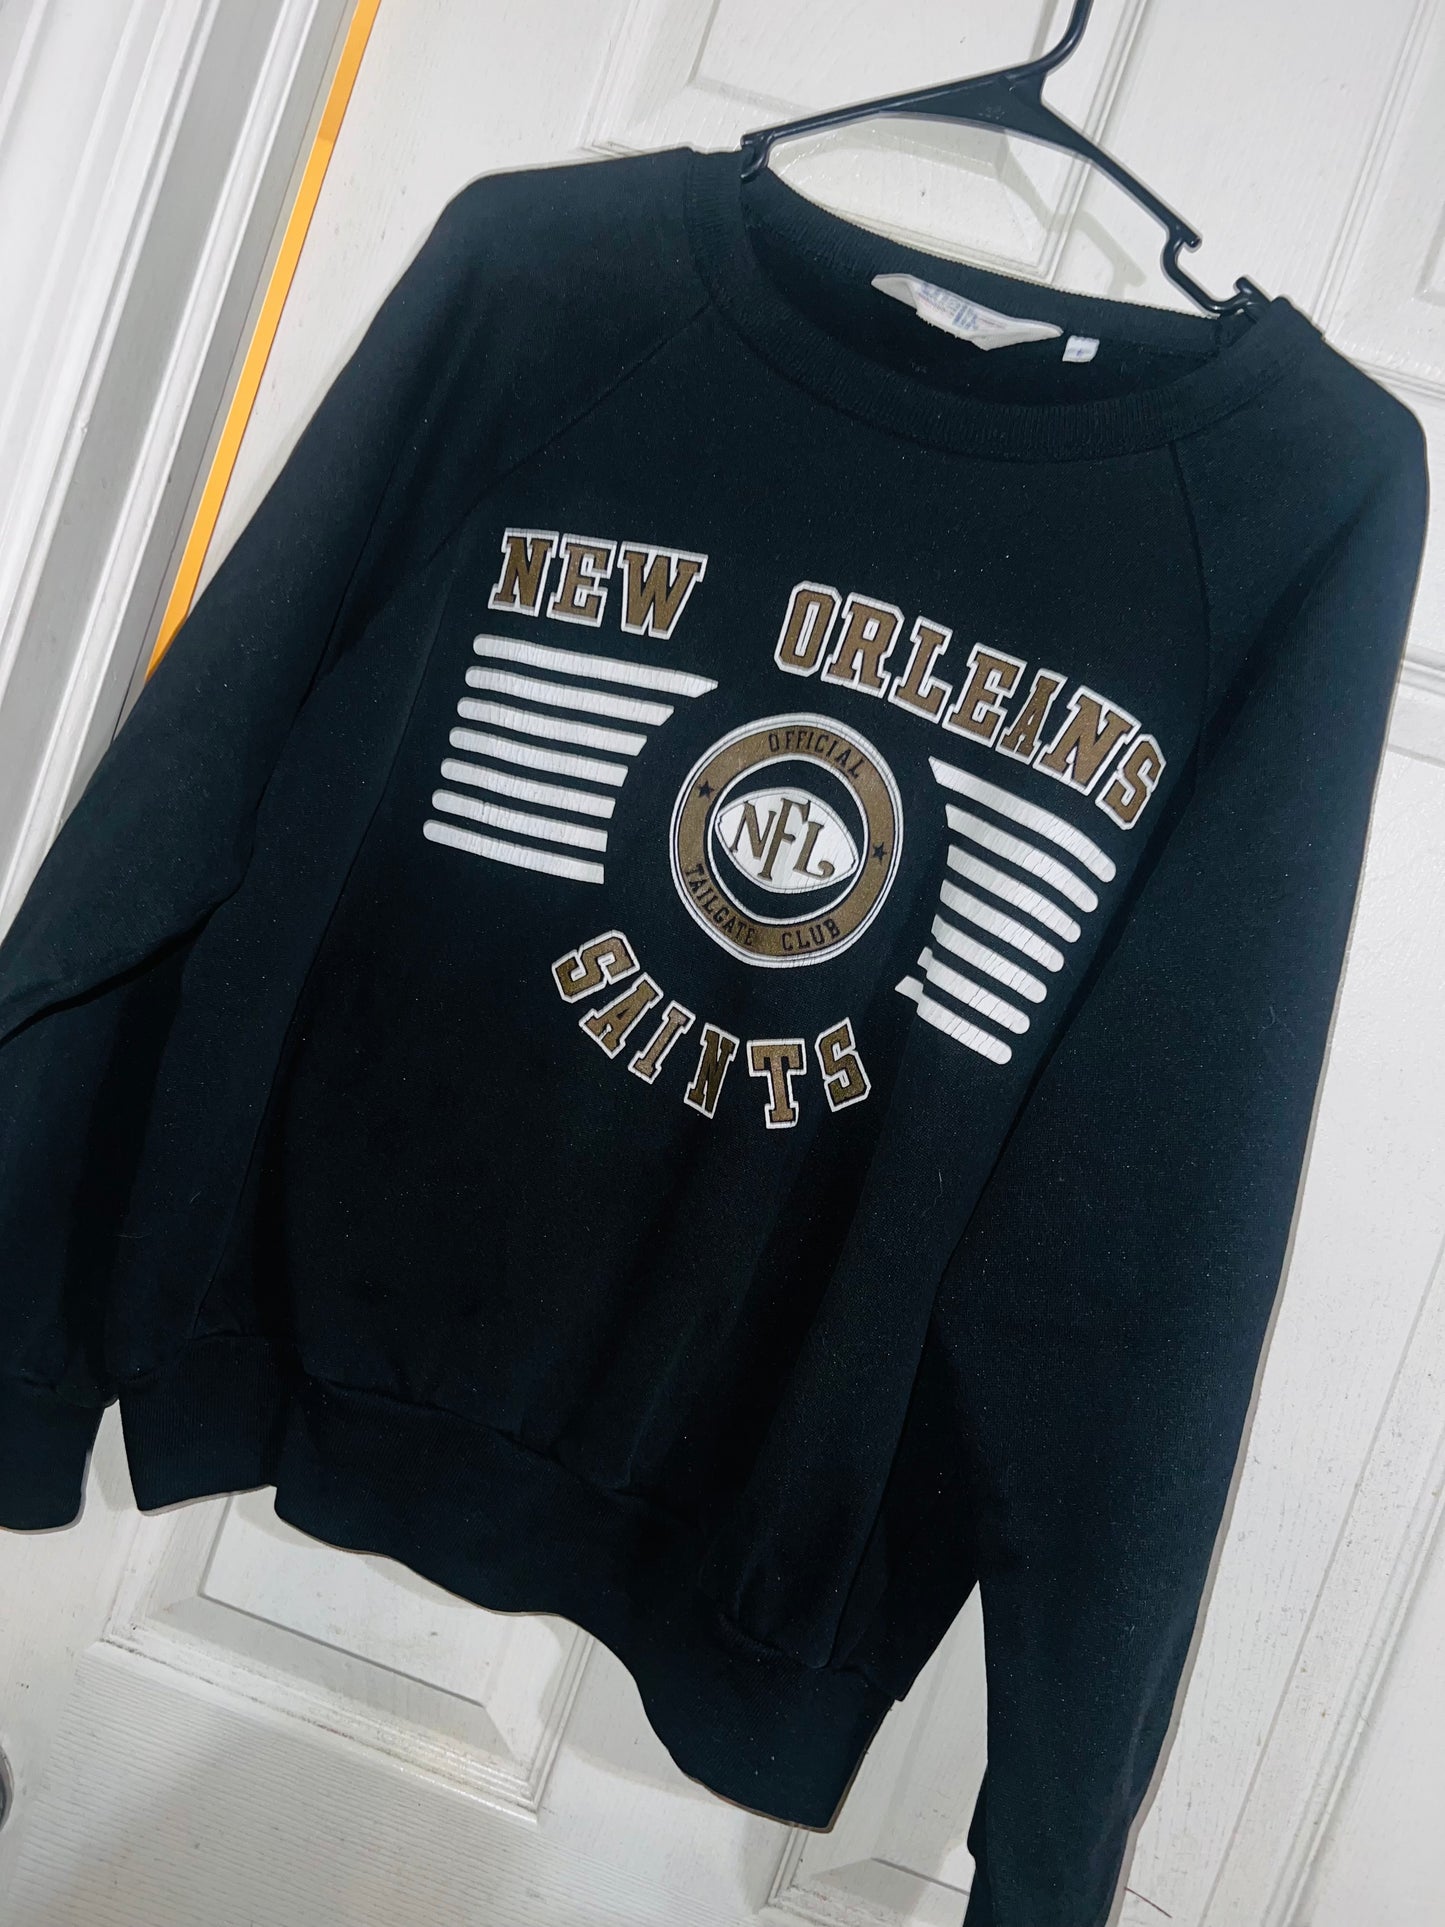 New Orleans Saints Vintage ChalkLine Sweatshirt